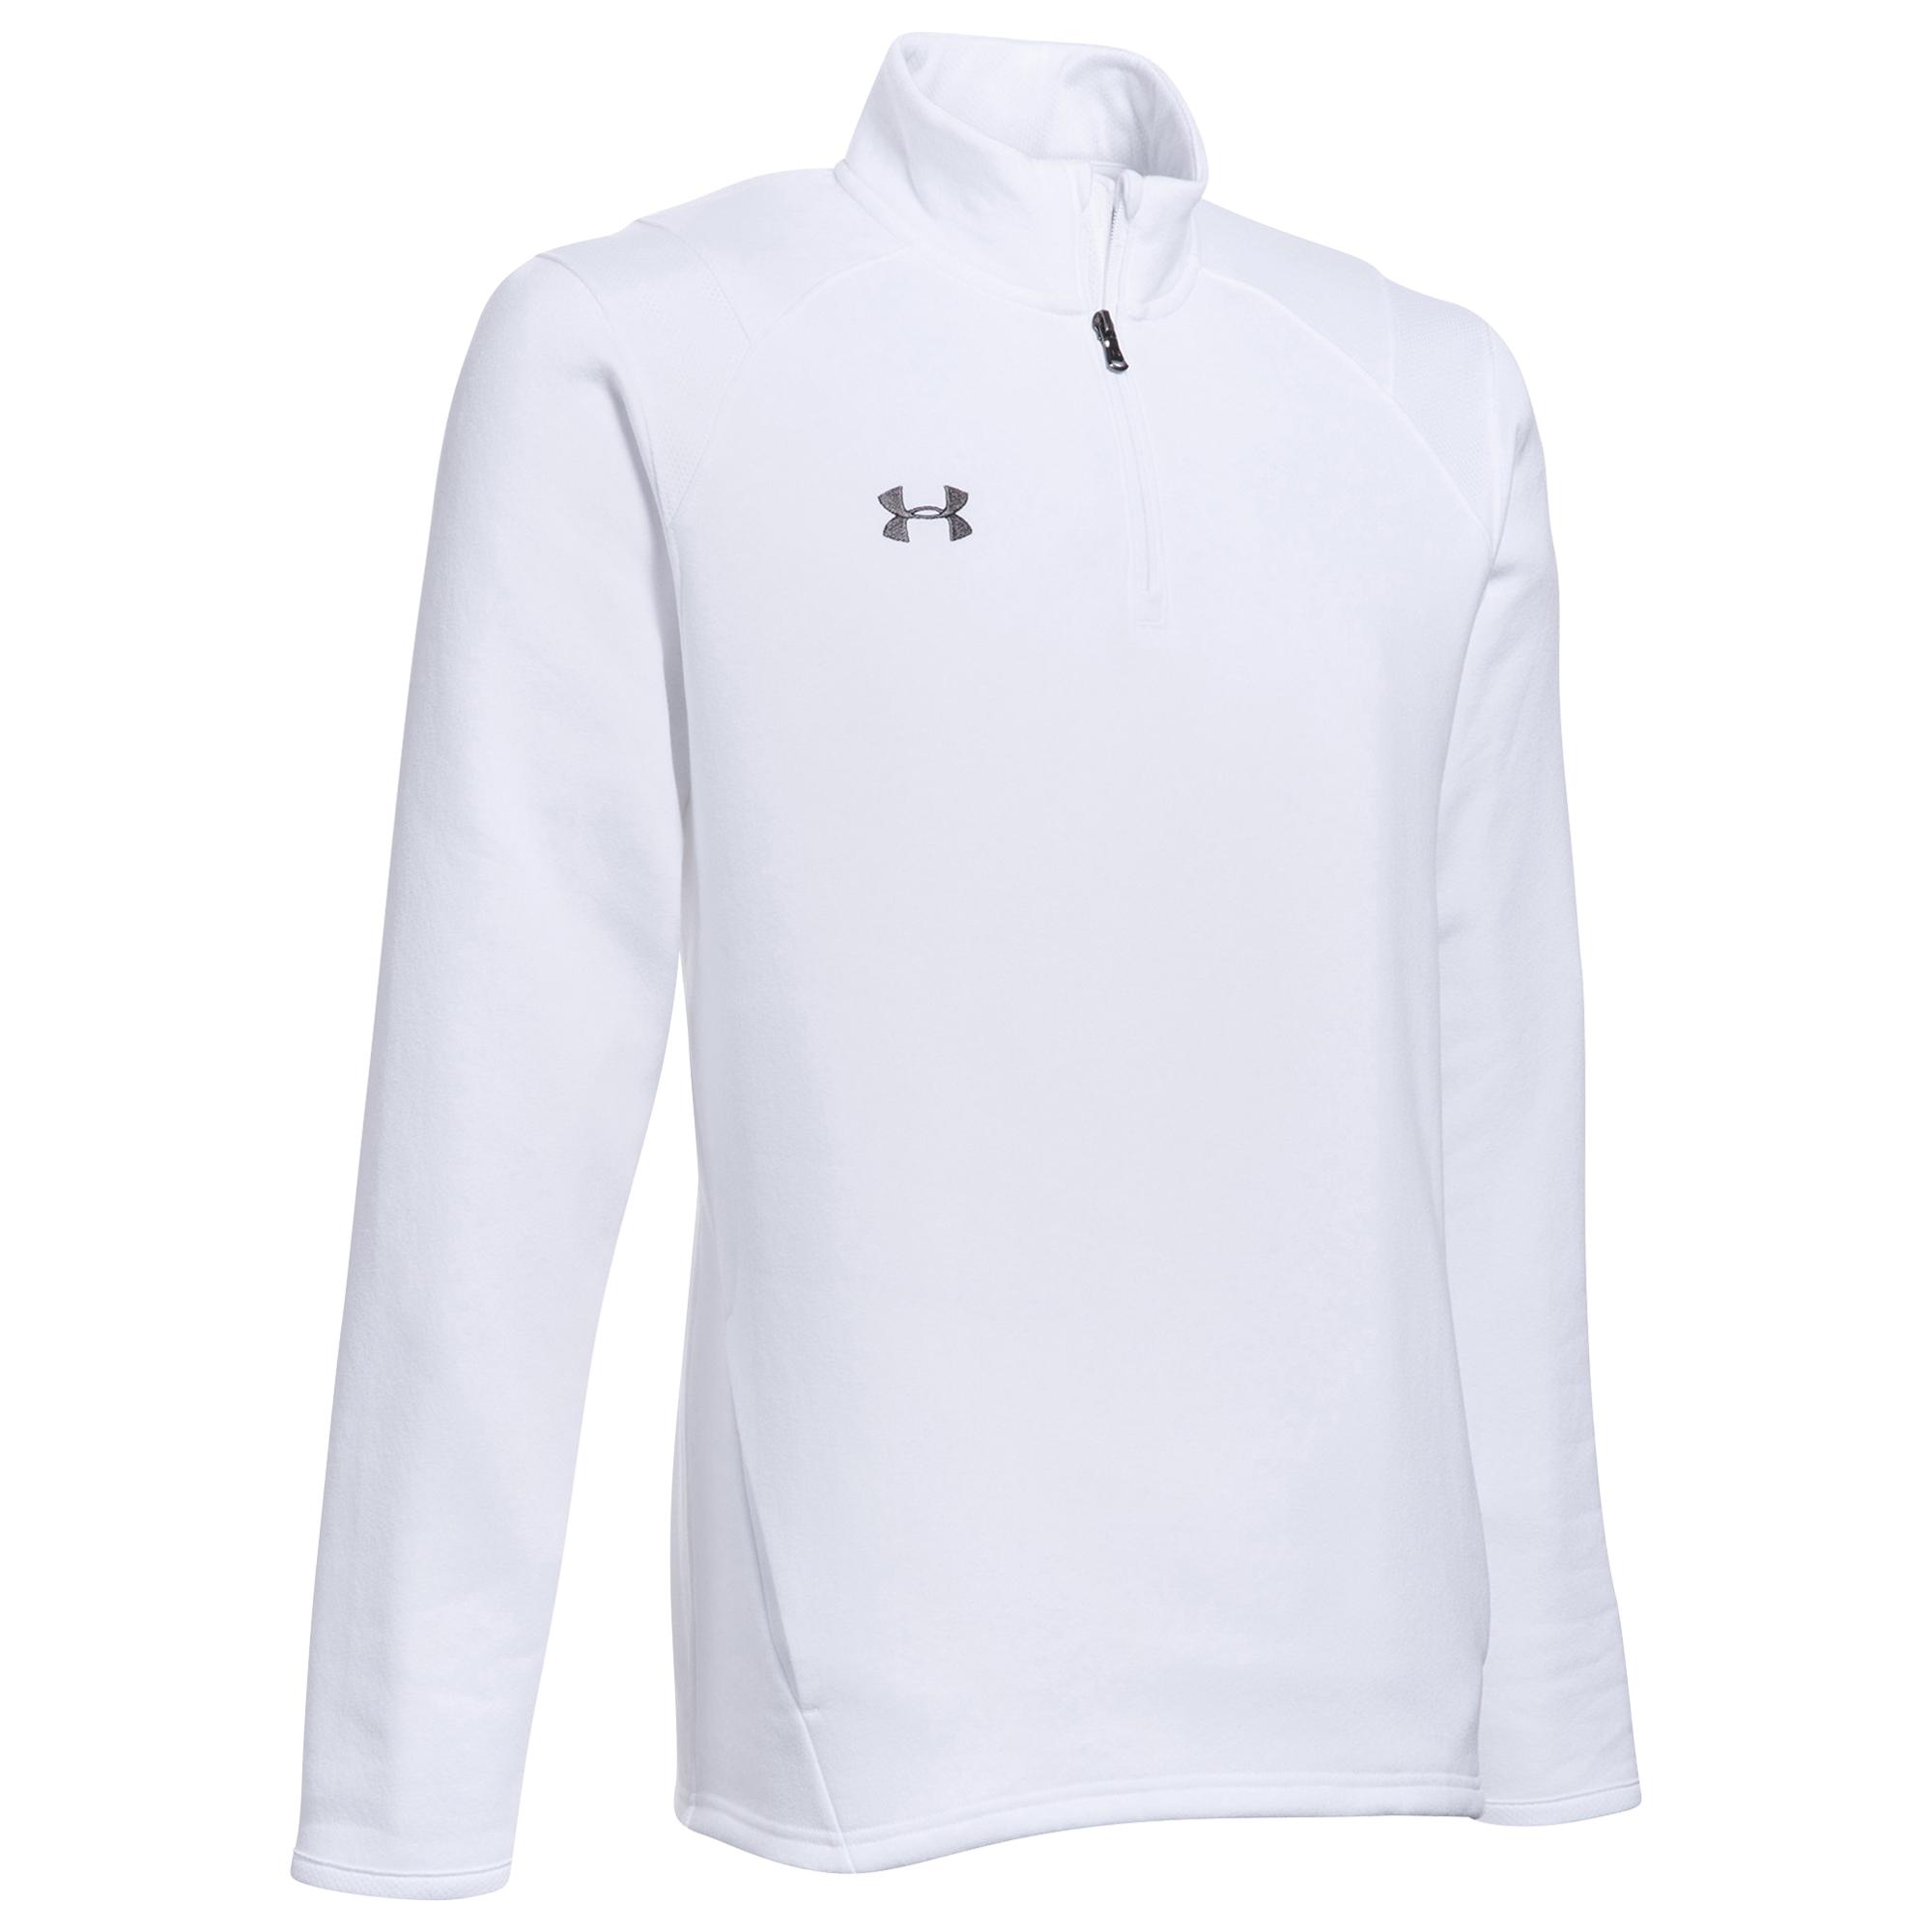 Under Armour Team Hustle 1/4 Zip Fleece in White/Graphite (White) for ...